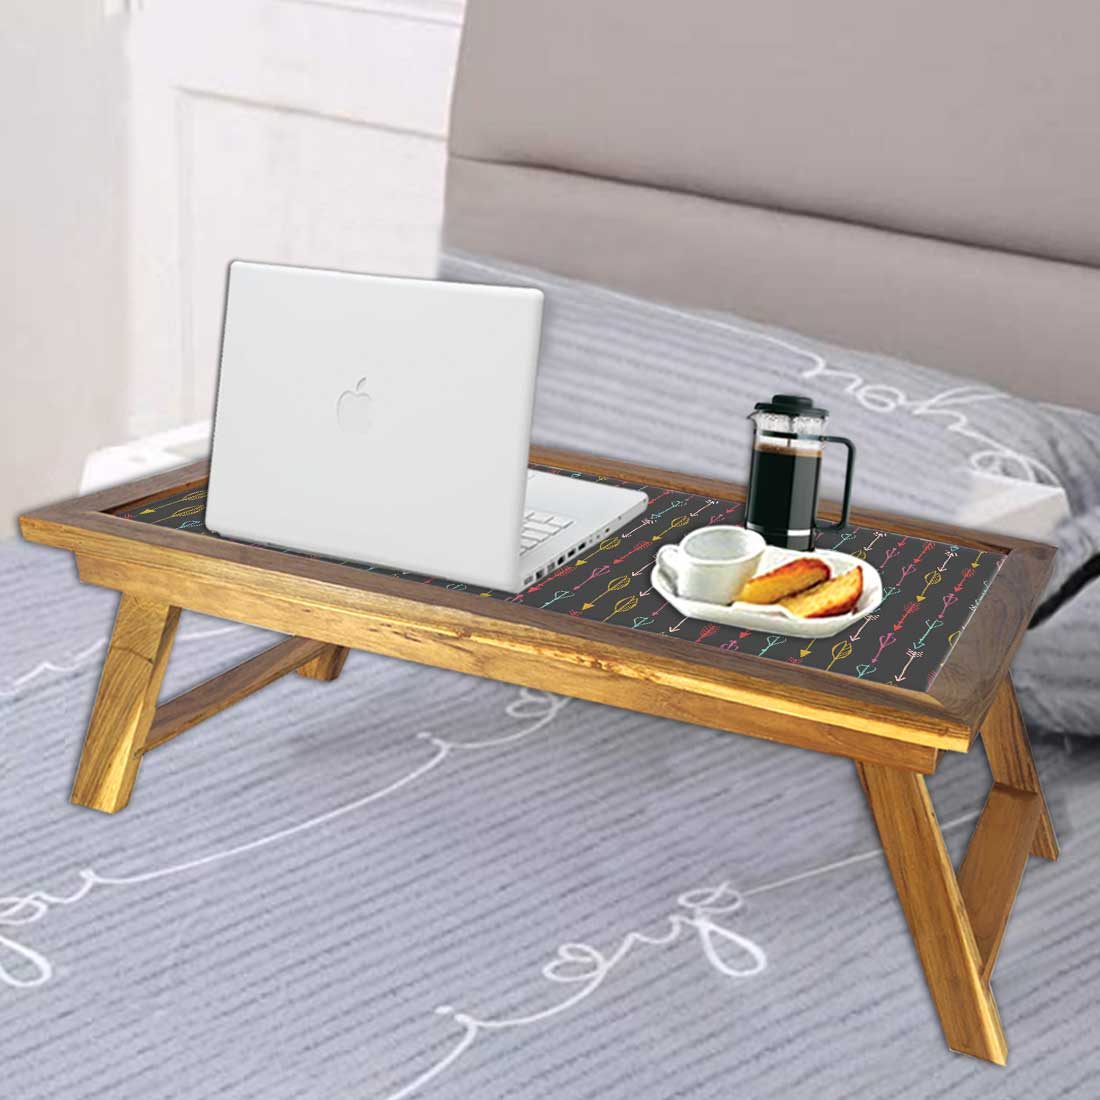 Nutcase Folding Laptop Table For Home Bed Lapdesk Breakfast Table Foldable Teak Wooden Study Desk - Multicolor Arrows Nutcase